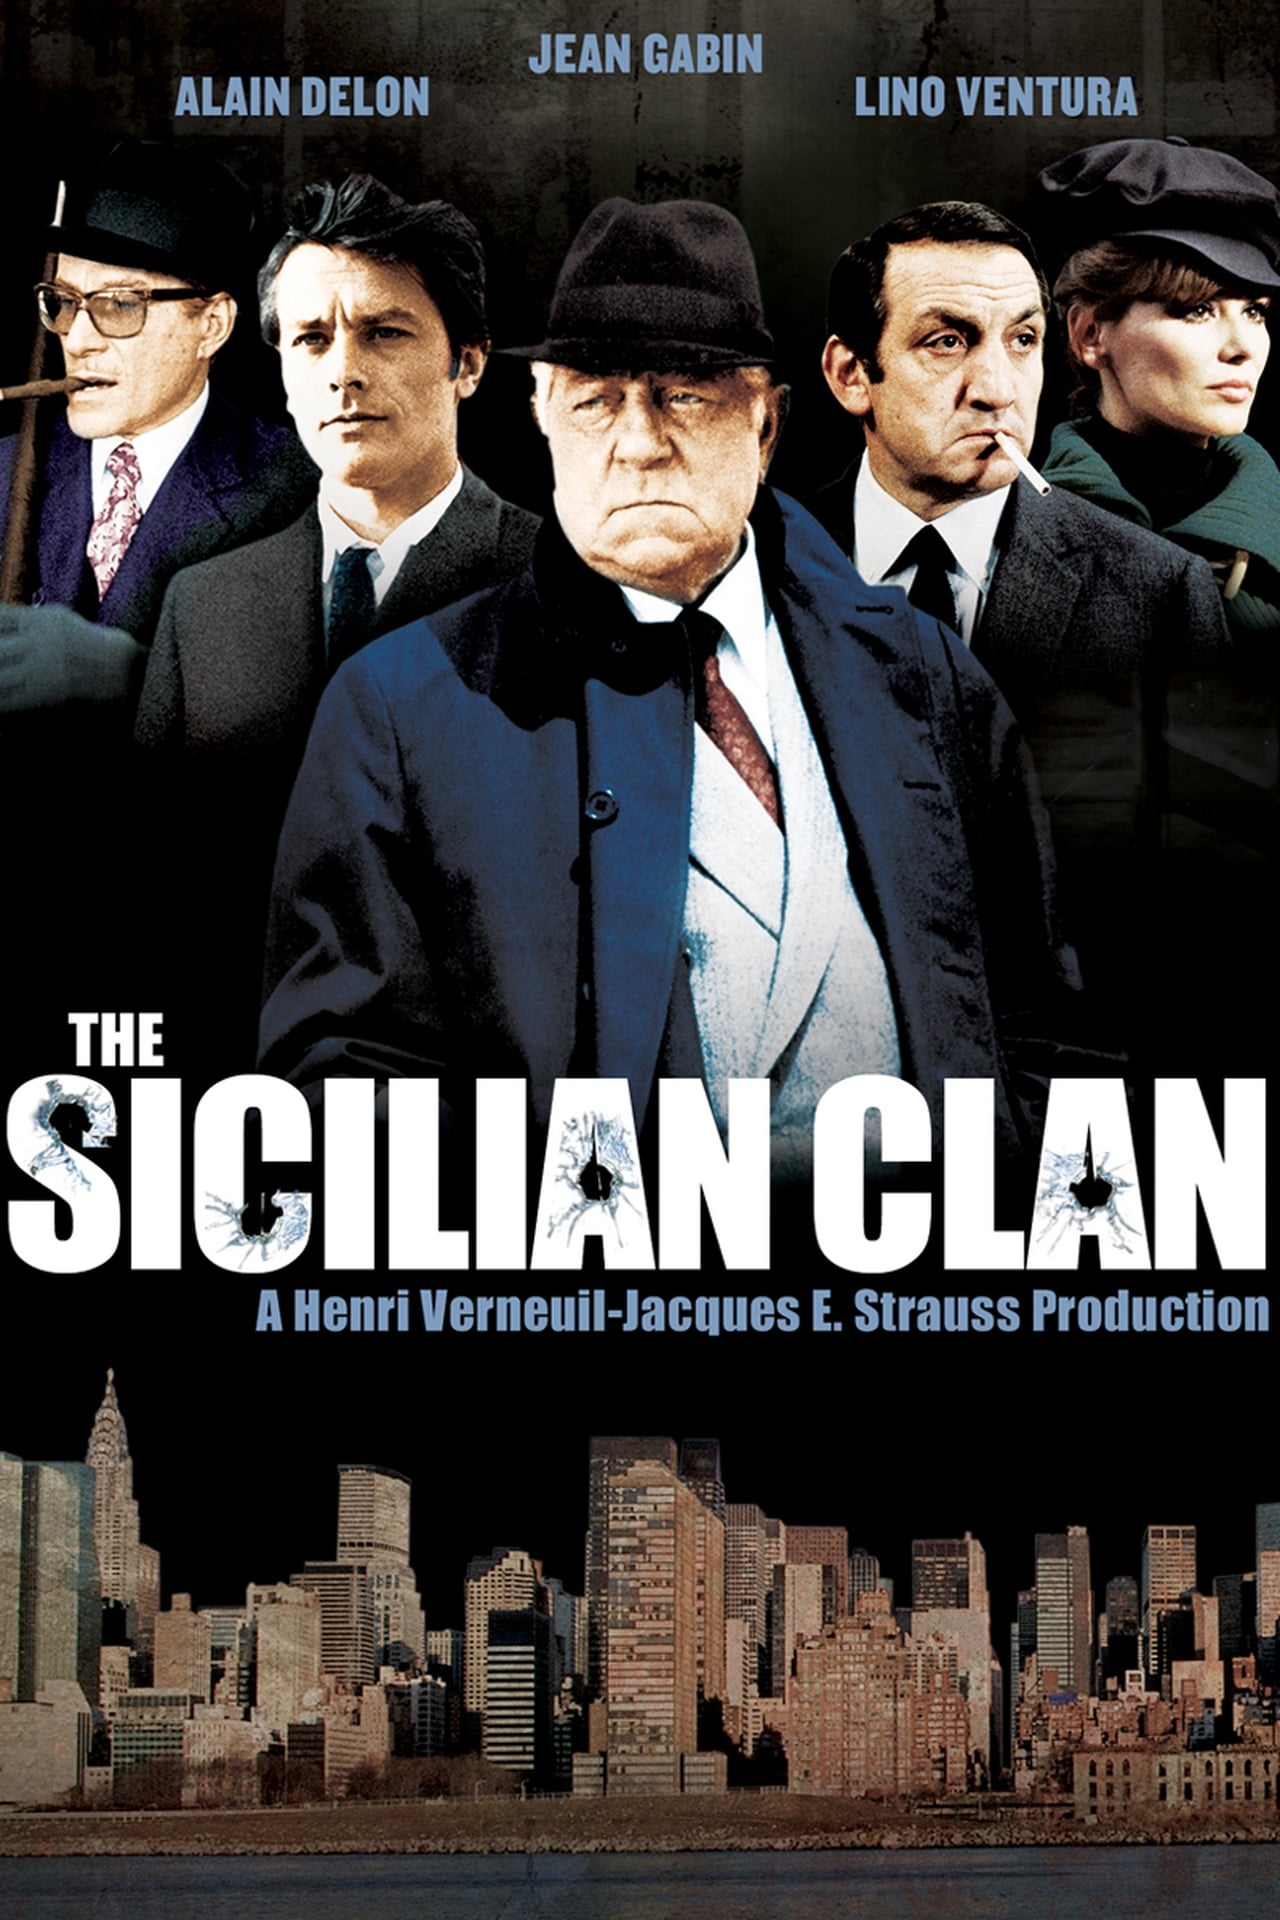 EN - The Sicilian Clan (1969) - ALAIN DELON, JEAN GABIN